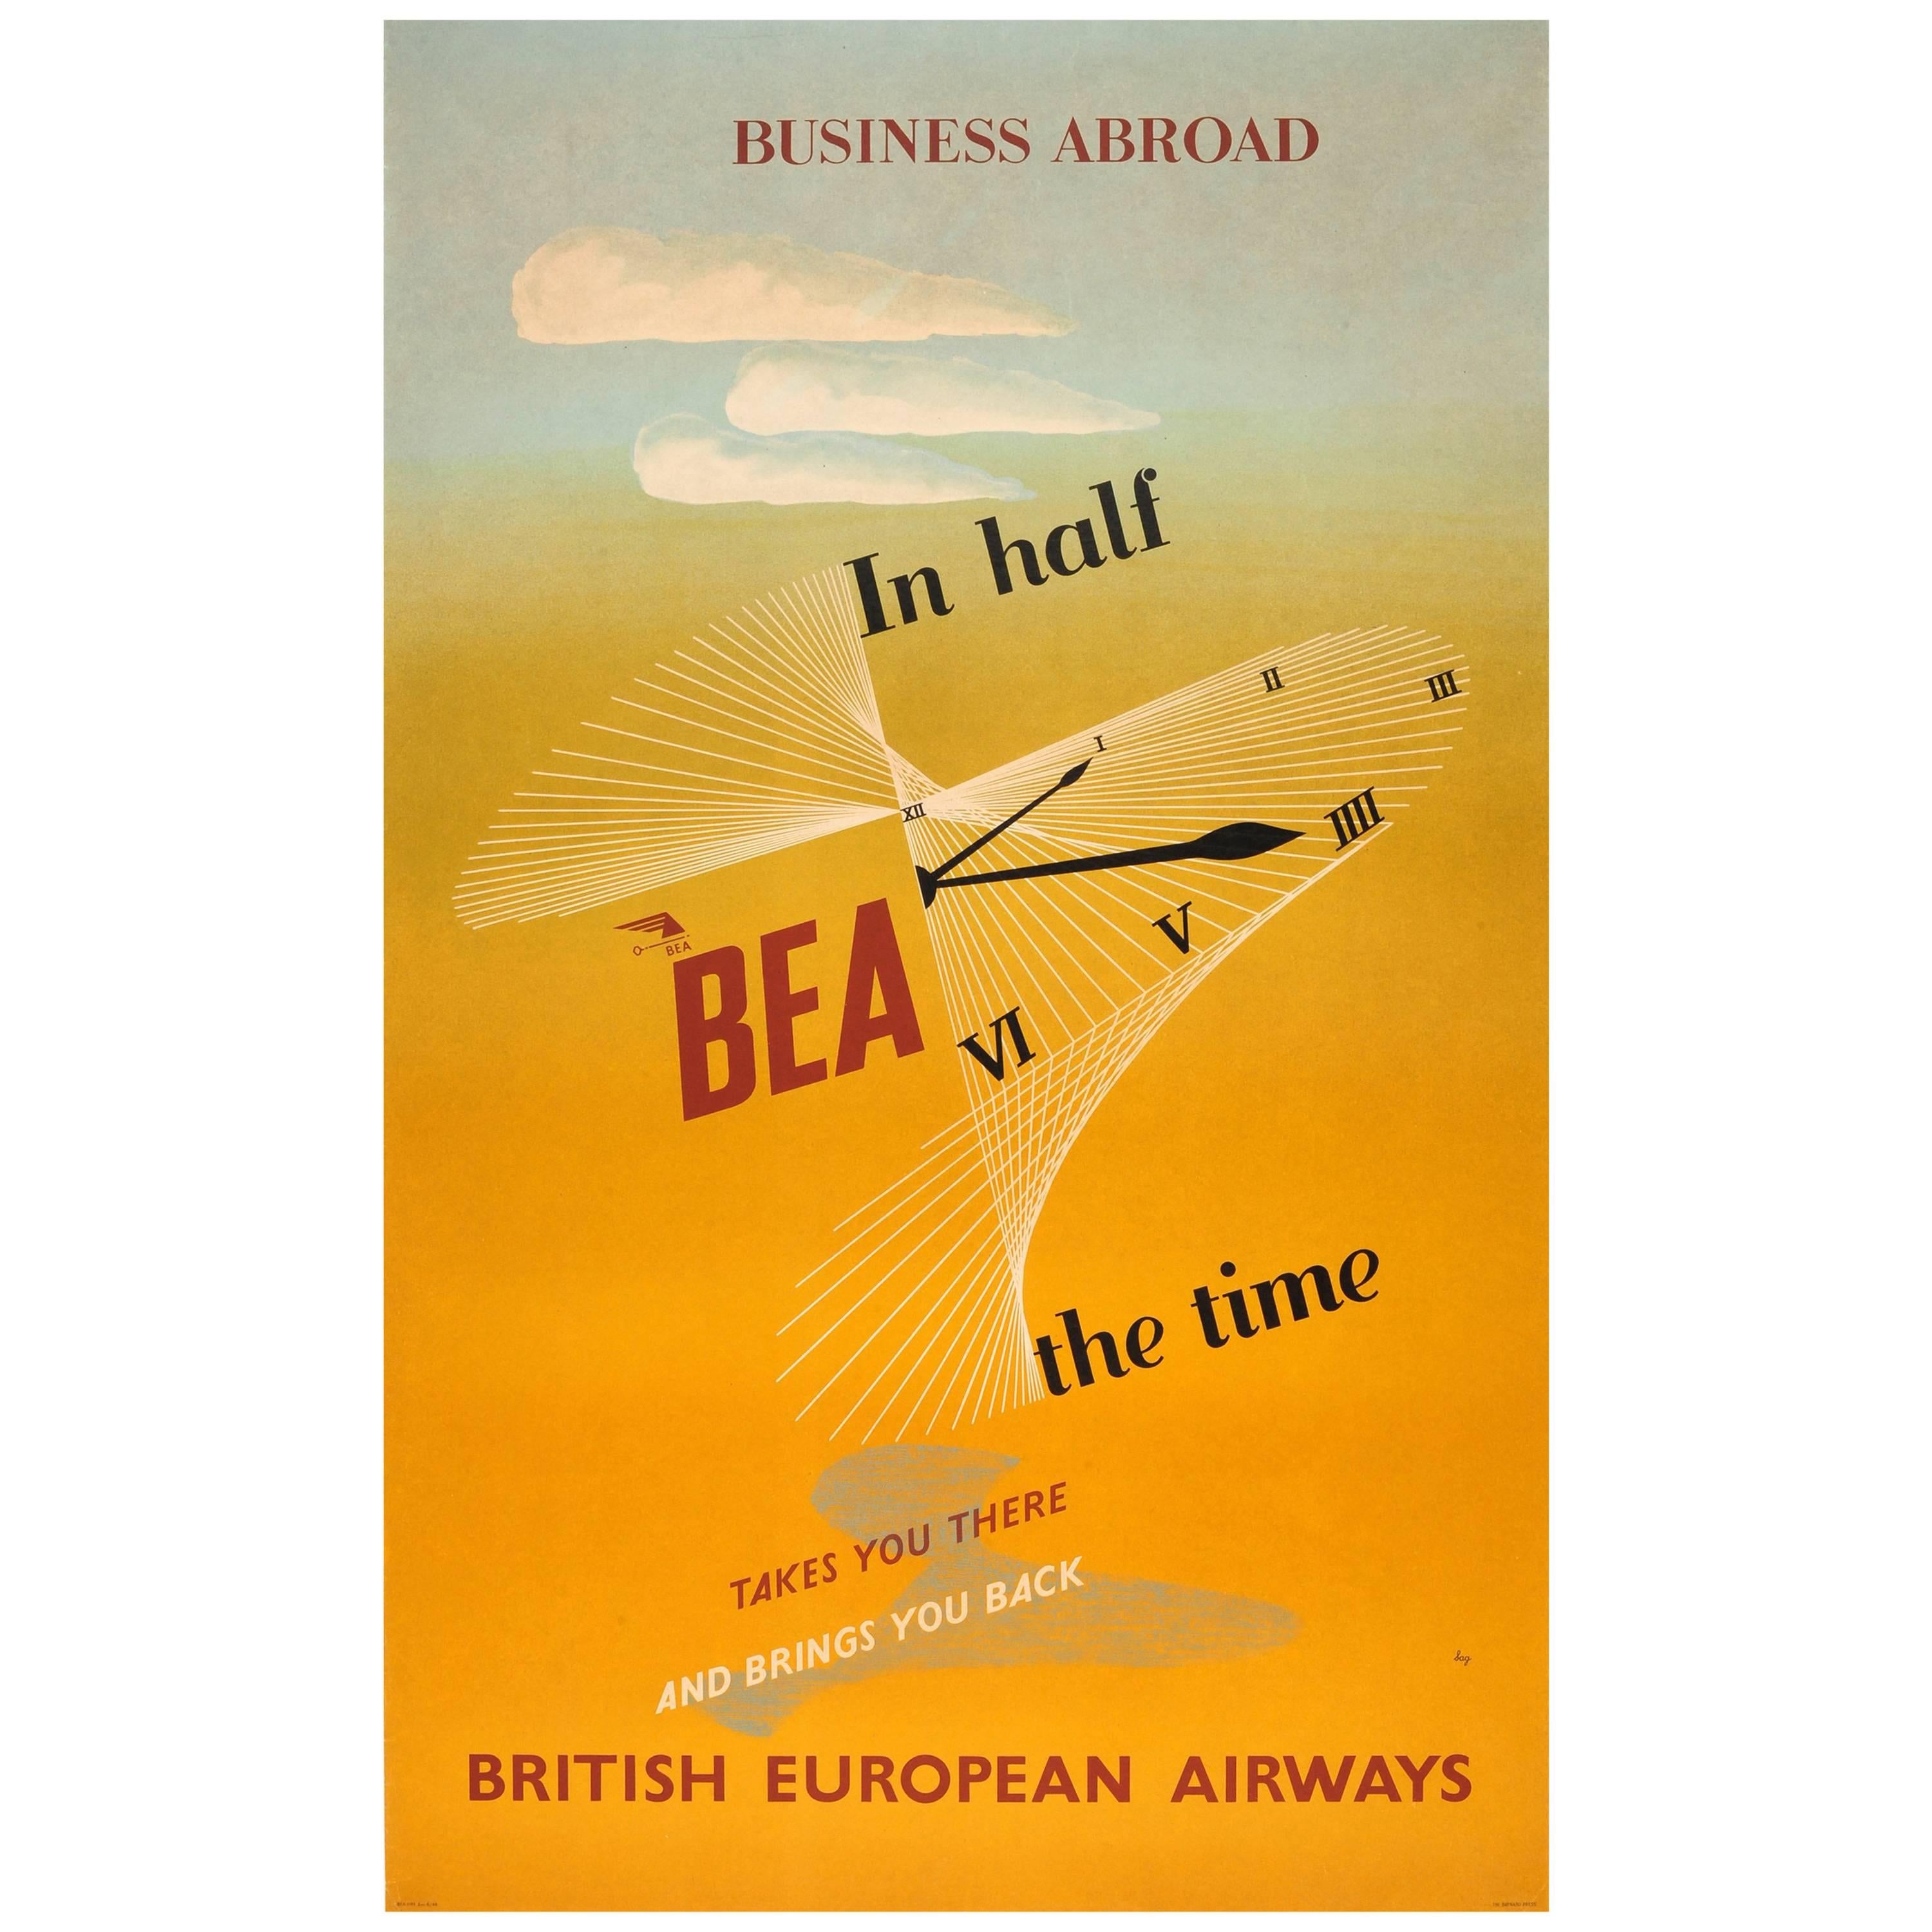 Original Vintage Midcentury British European Airways Poster for Business Abroad